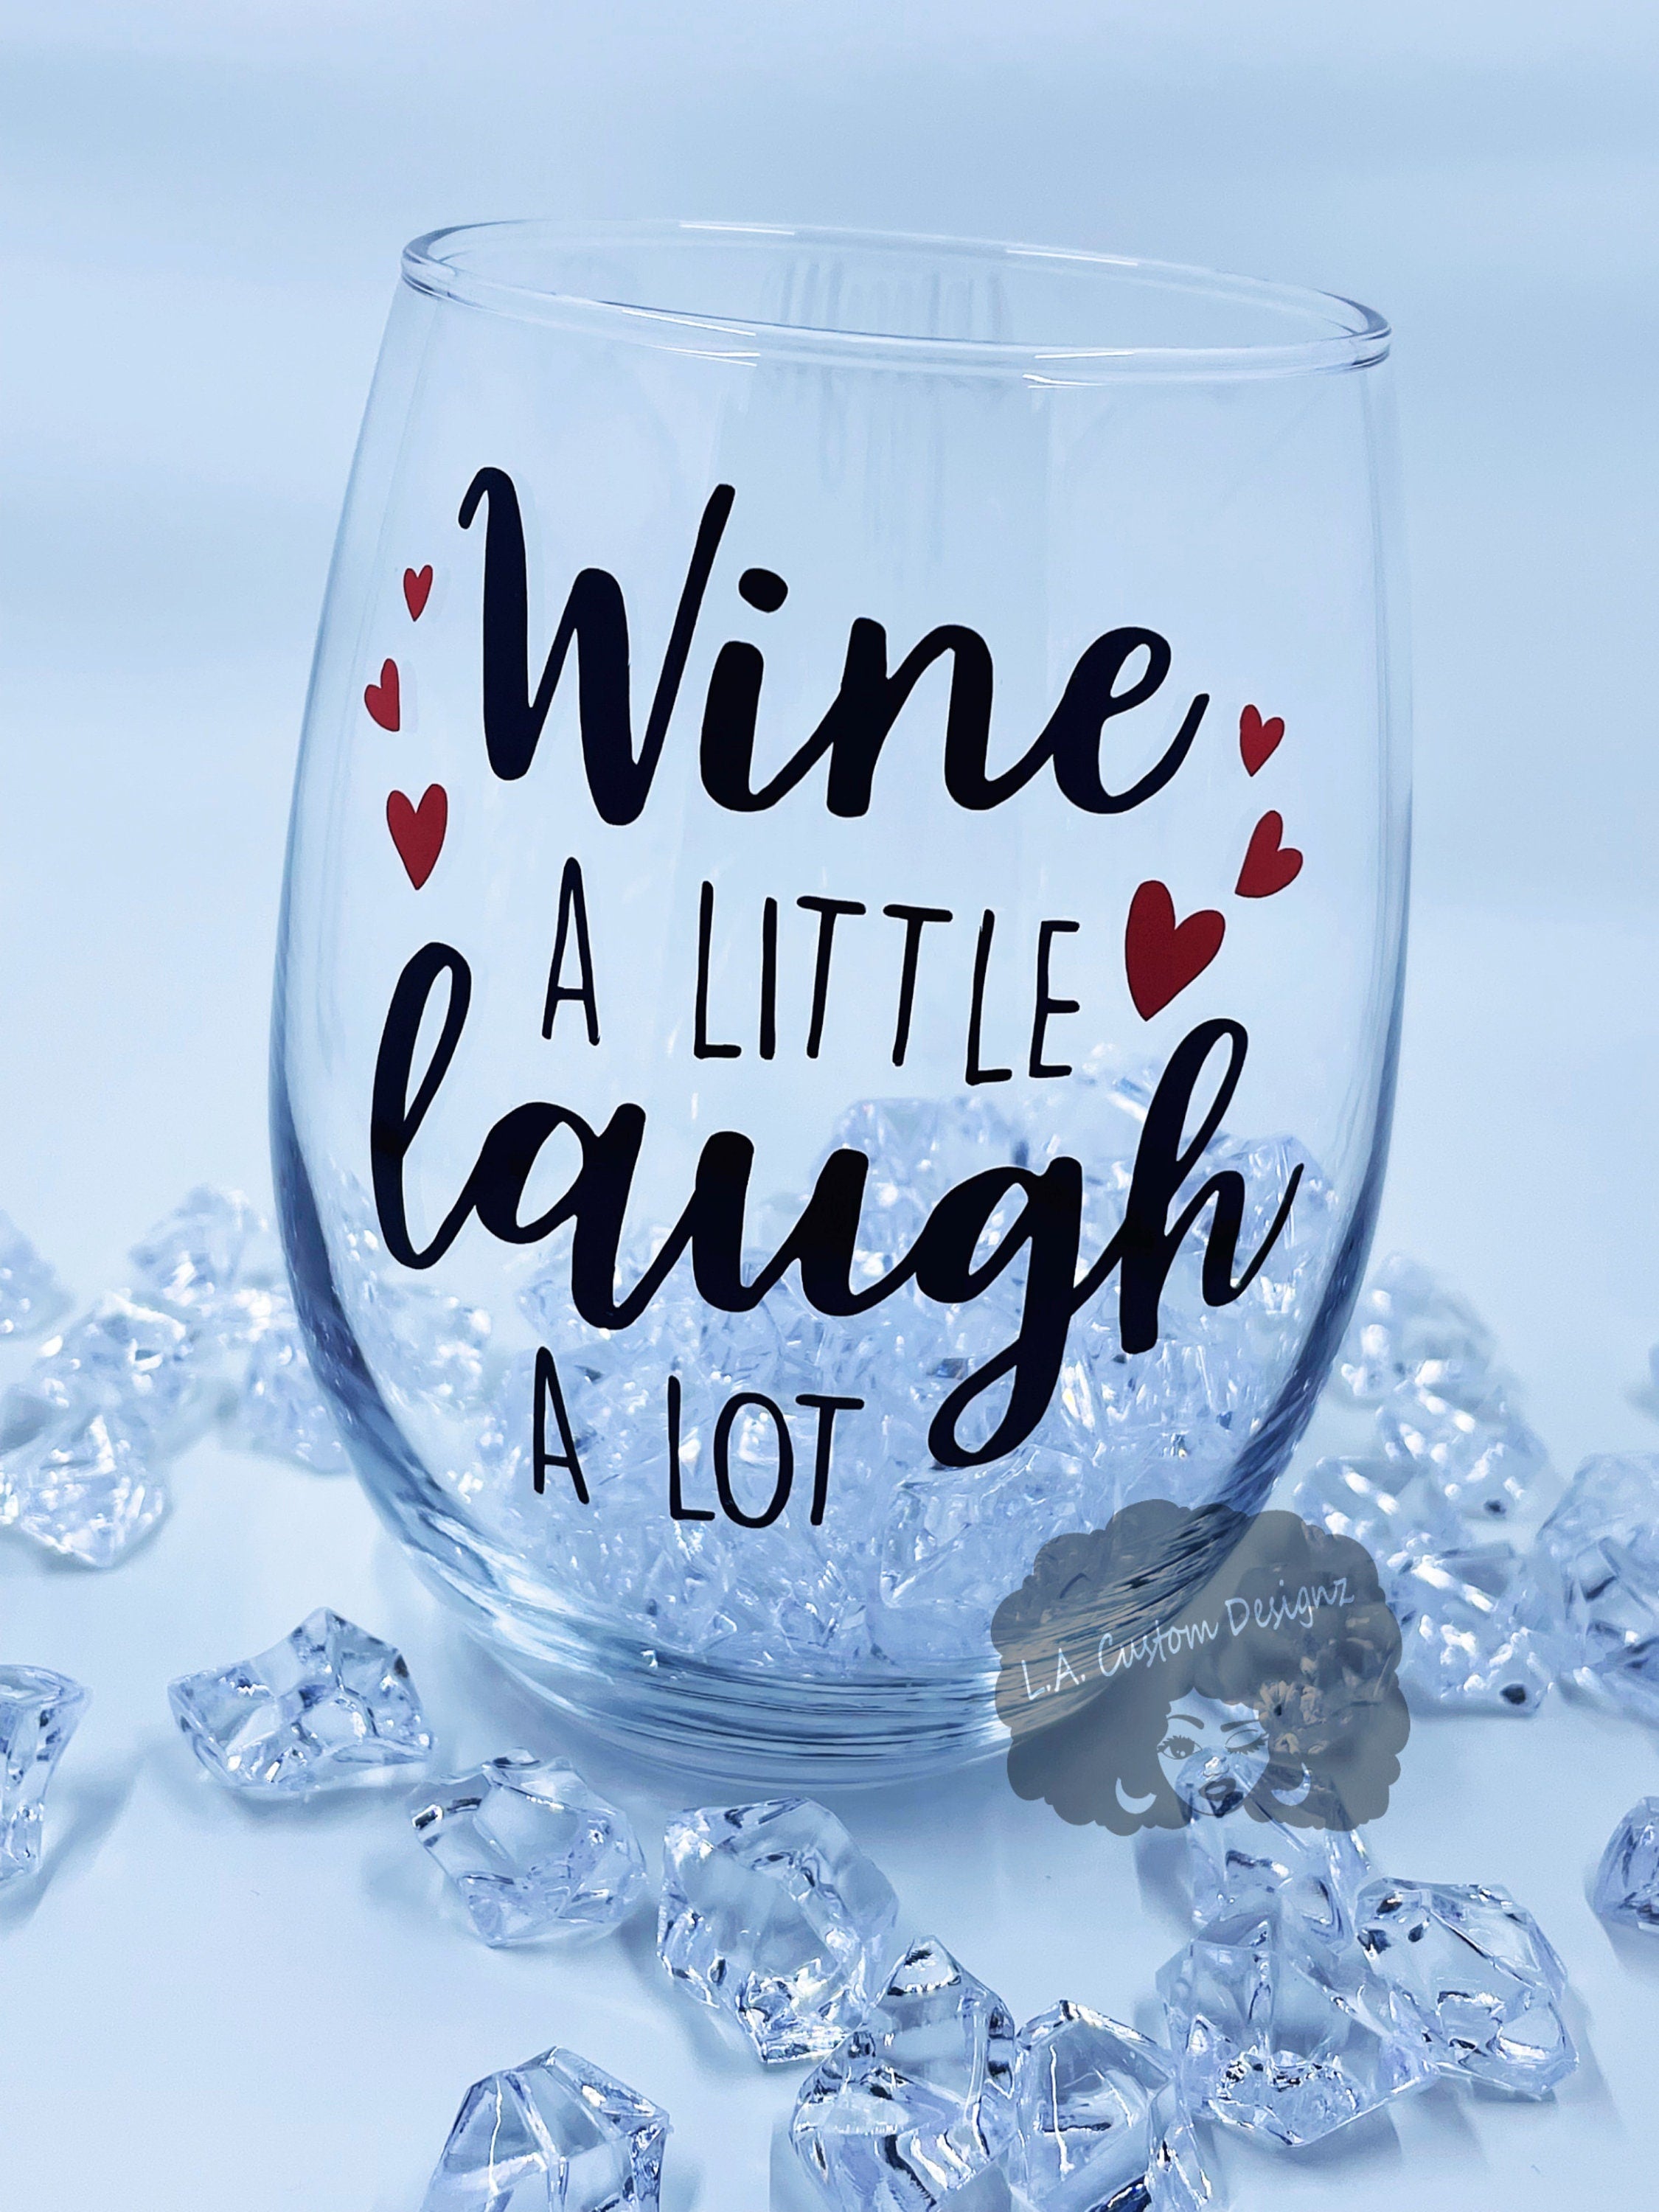 Wine a little Laugh a Lot wine glass – The Artsy Spot